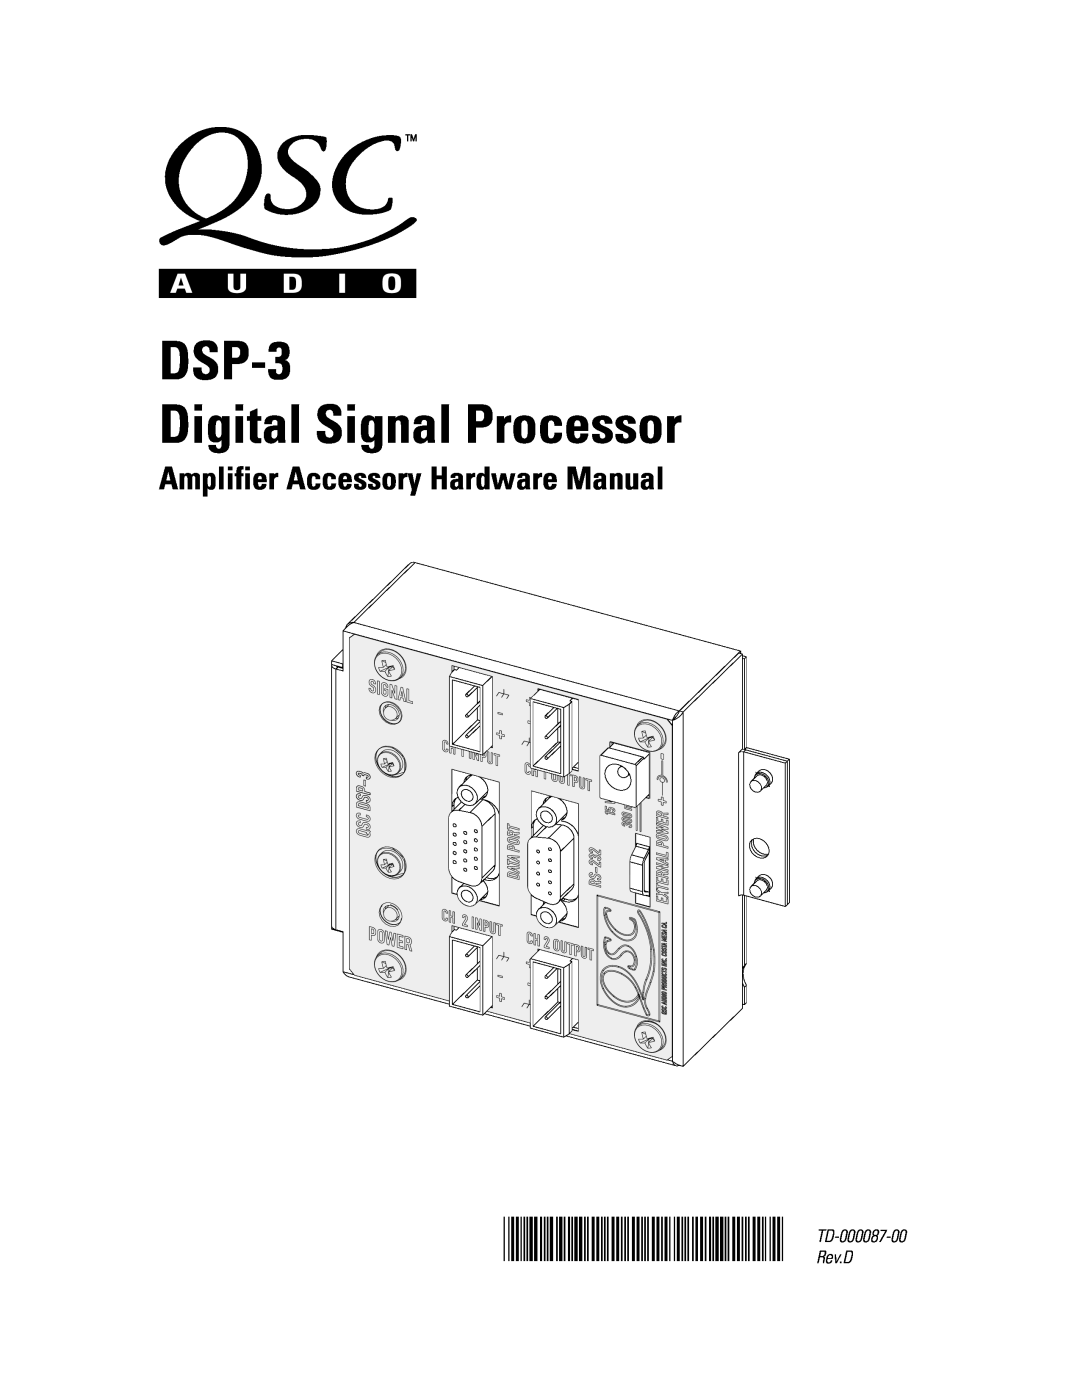 QSC Audio manual Amplifier Accessory Hardware Manual, DSP-3 Digital Signal Processor, TD-000087-00* TD-000087-00, Rev.D 